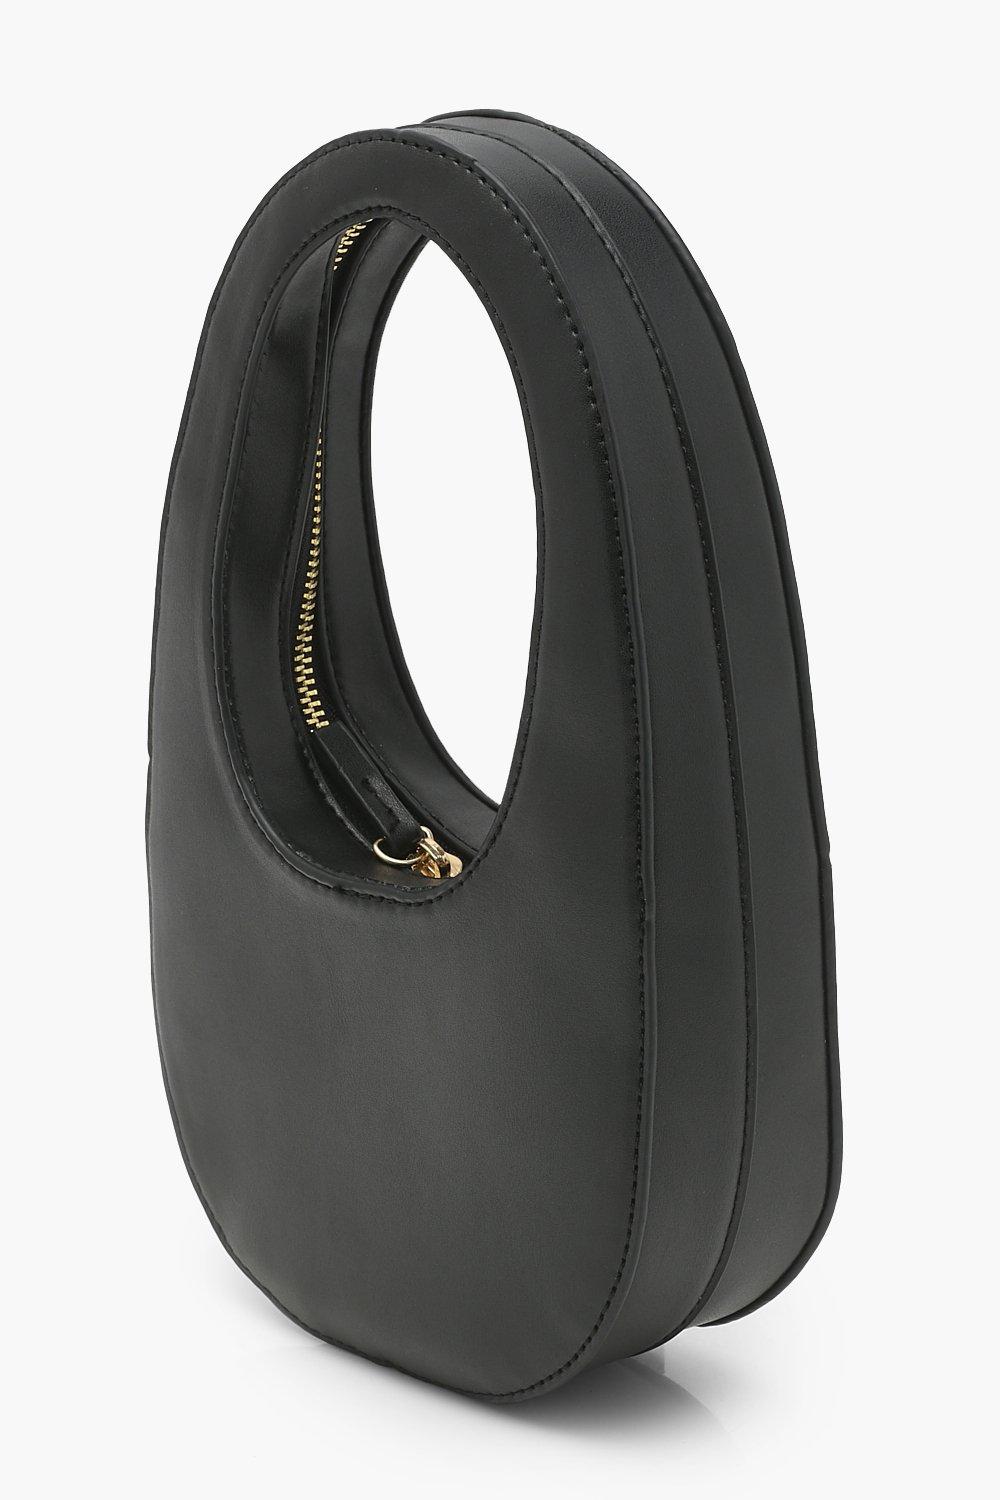  ZiMing Rectangle Handbags for Women Top-Handle Handbag